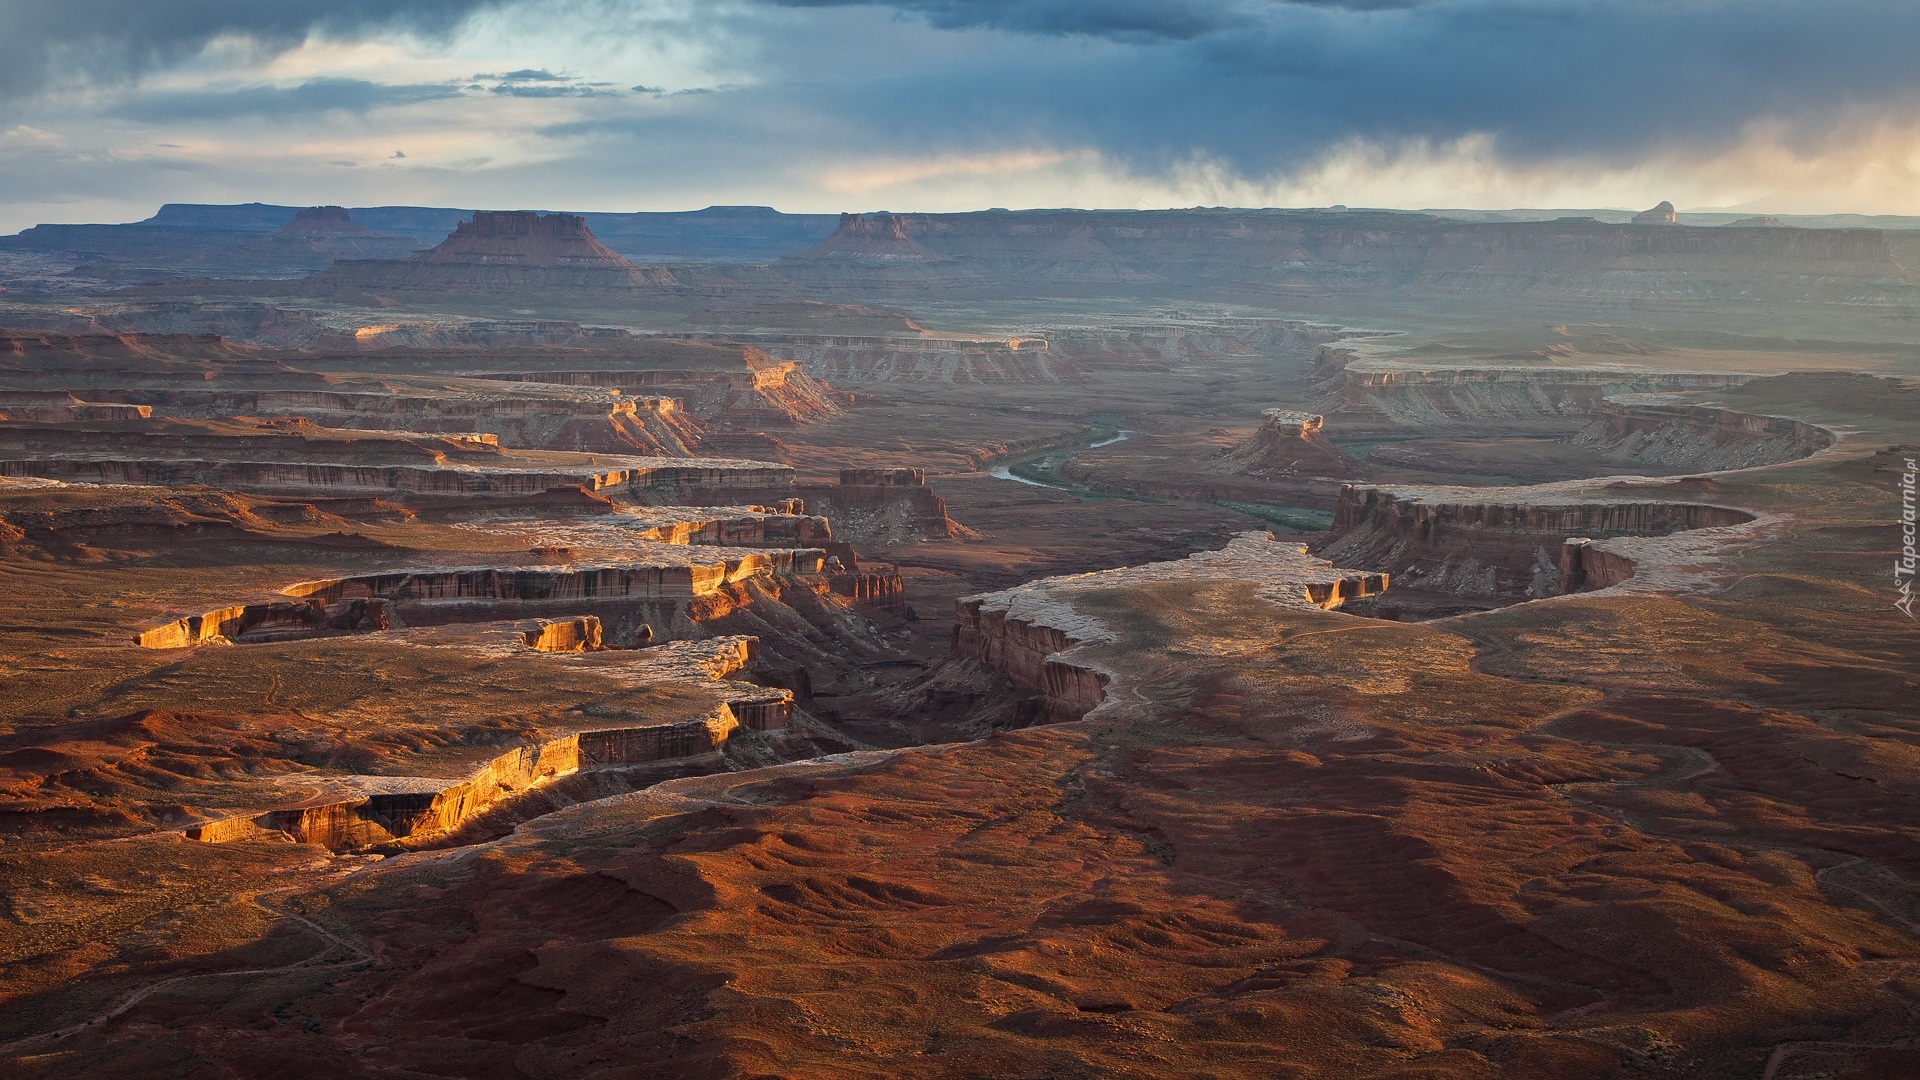 Park Narodowy Canyonlands, Kanion, Skały, Rzeka, Overlook, Utah Utah, Stany Zjednoczone